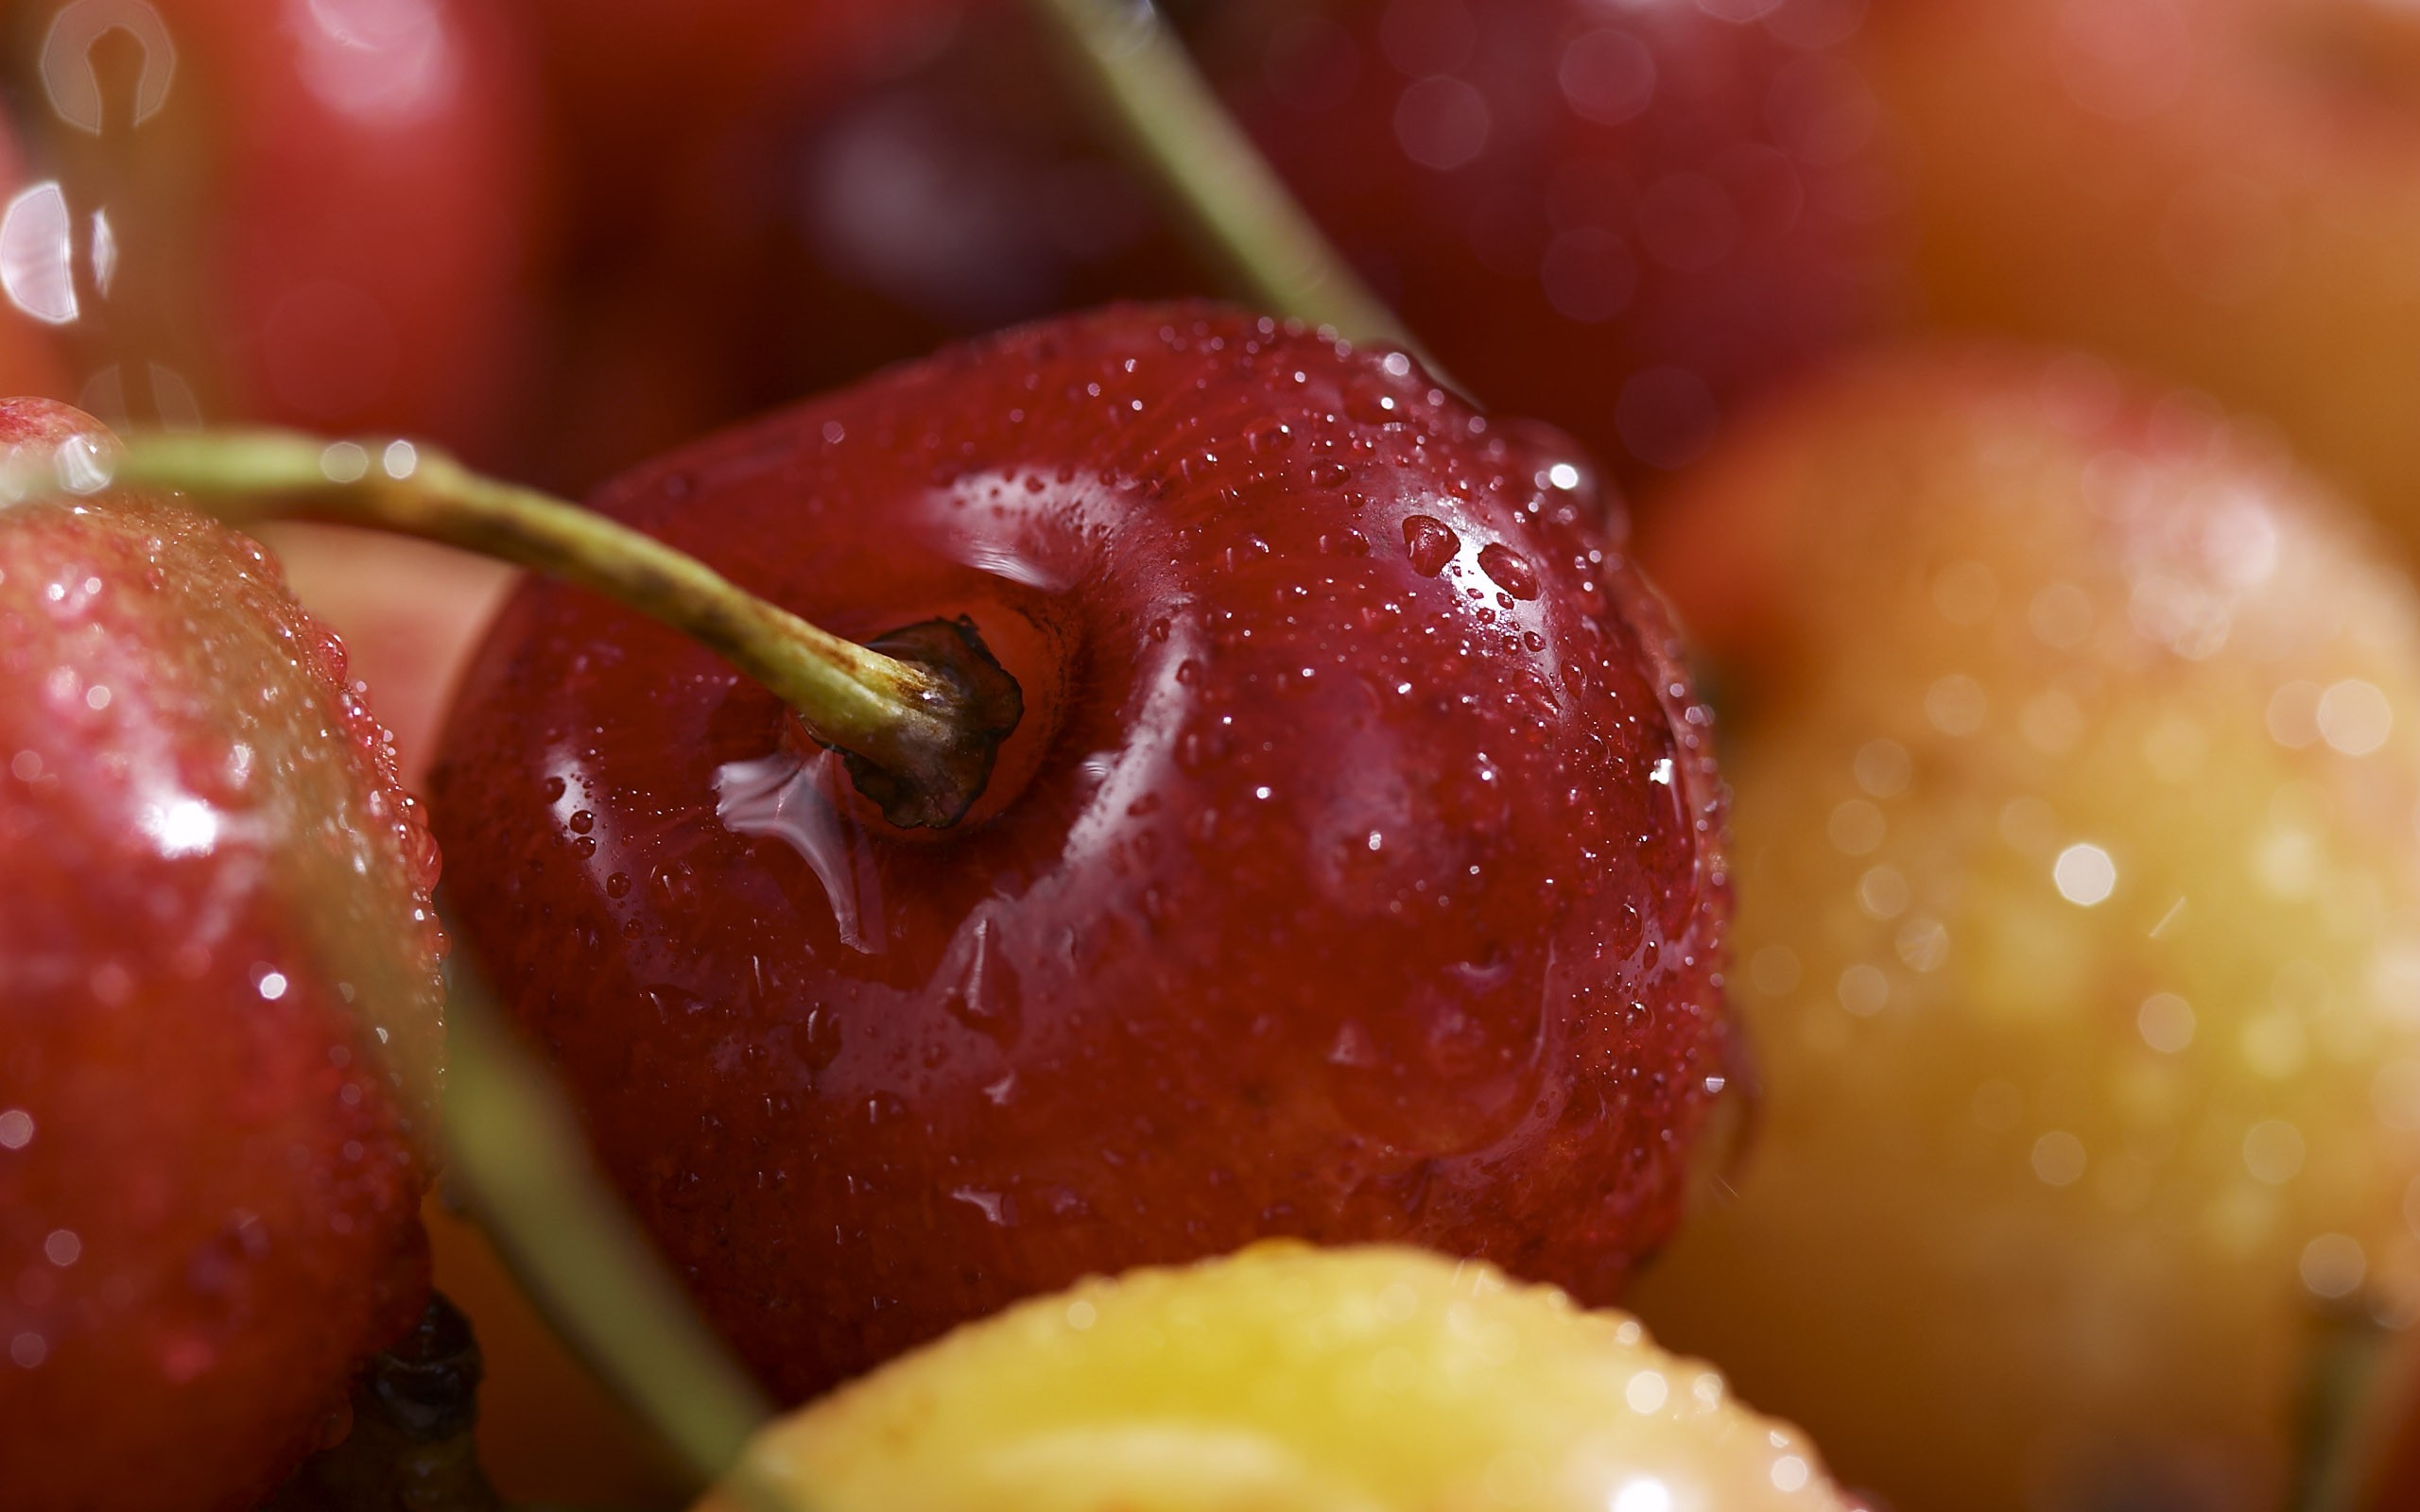 Descarga gratuita de fondo de pantalla para móvil de Cereza, Frutas, Alimento.